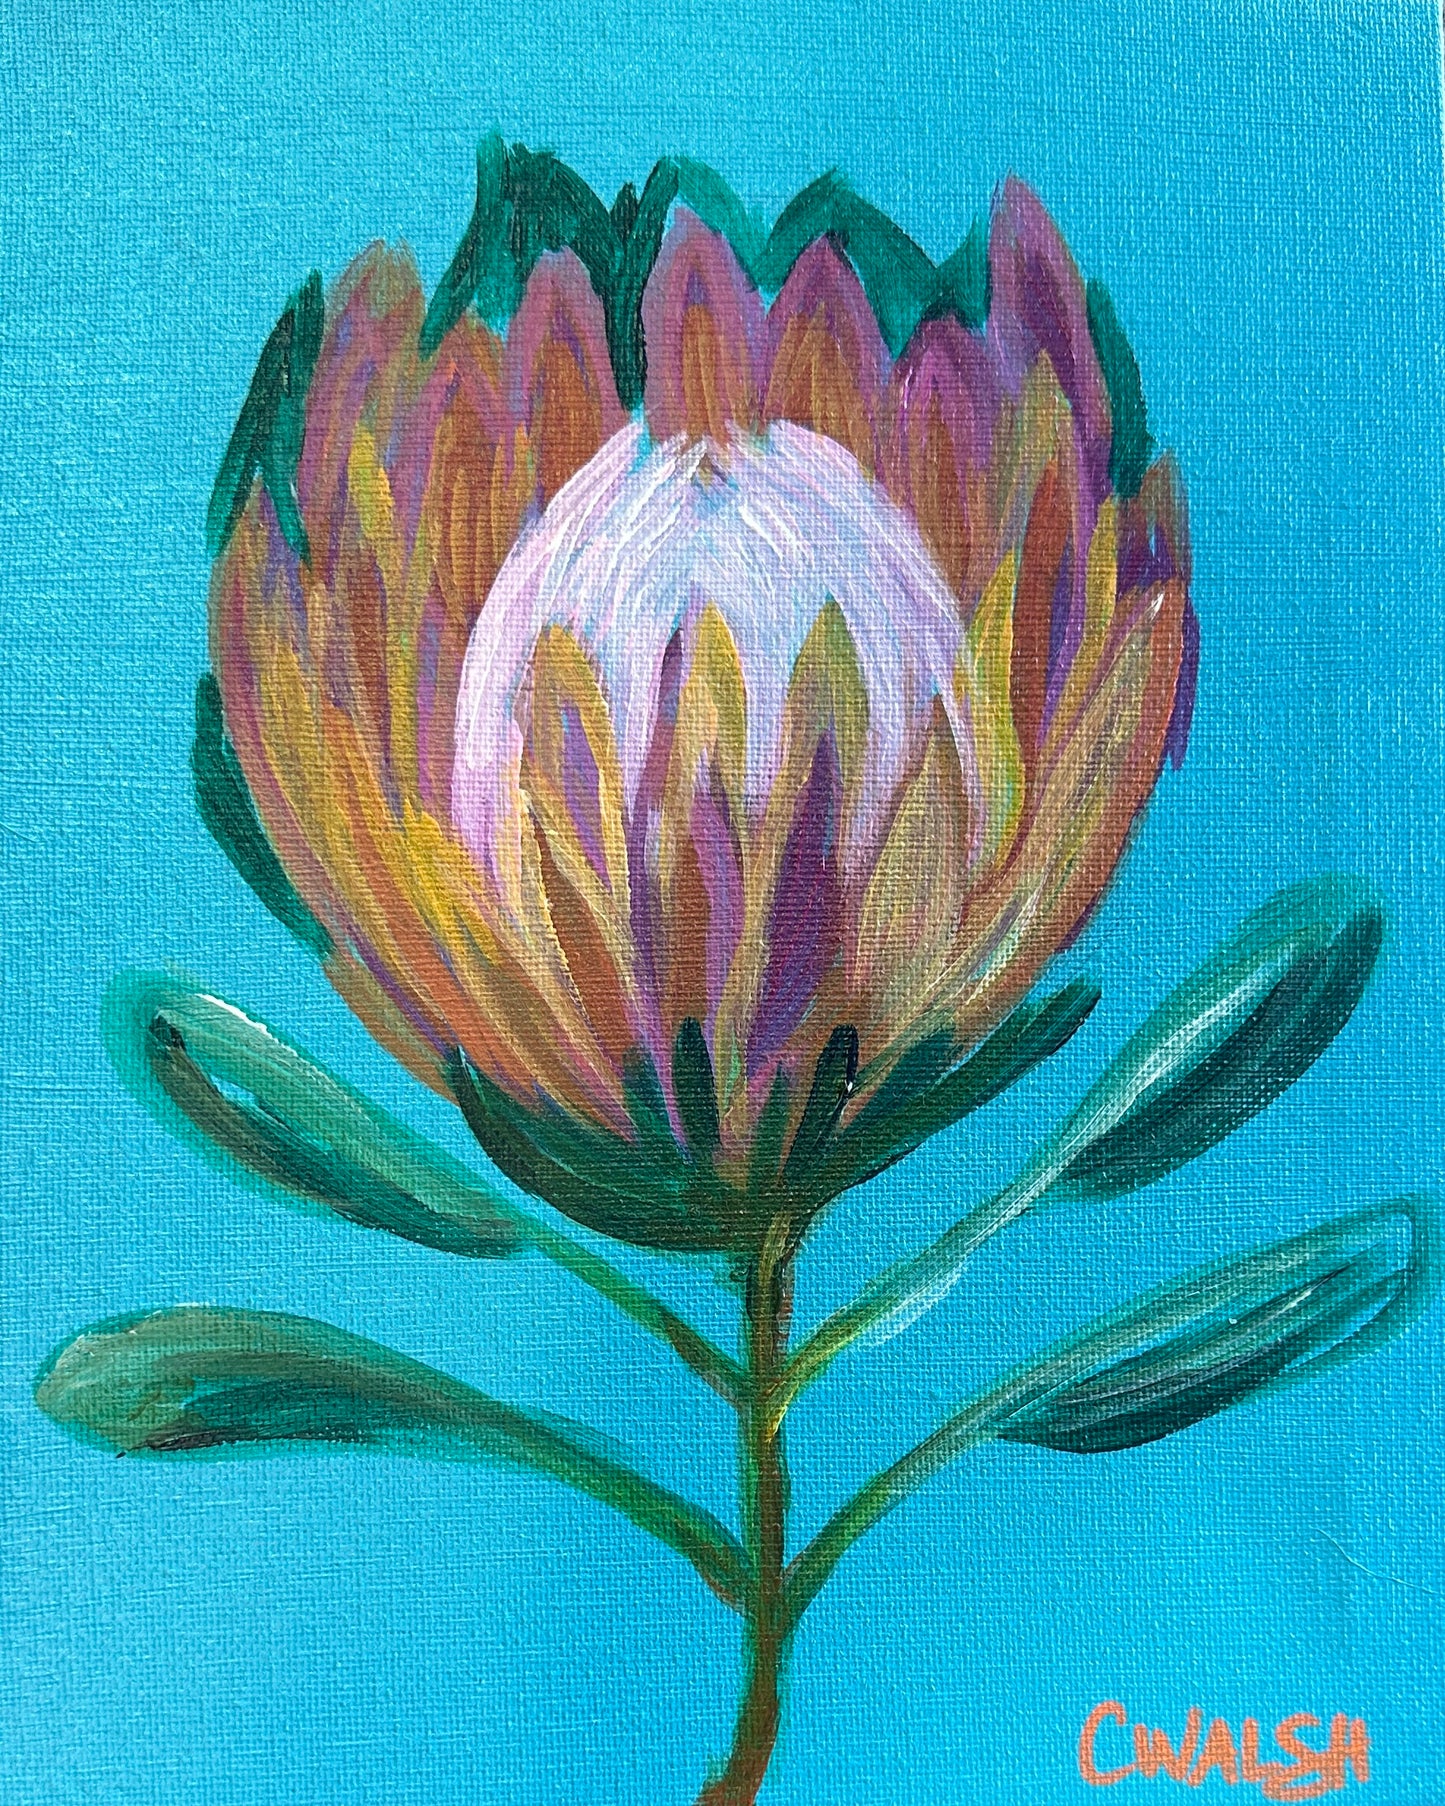 "Protea in Bloom" Acrylic on Canvas - 20cm x 25cm